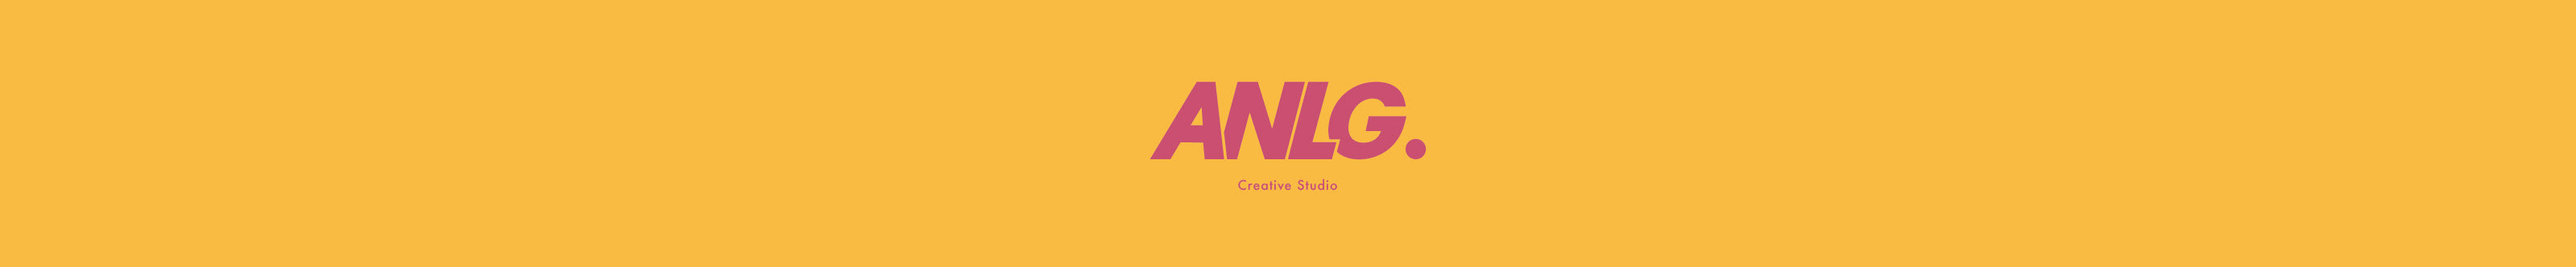 Studio ANLG's profile banner